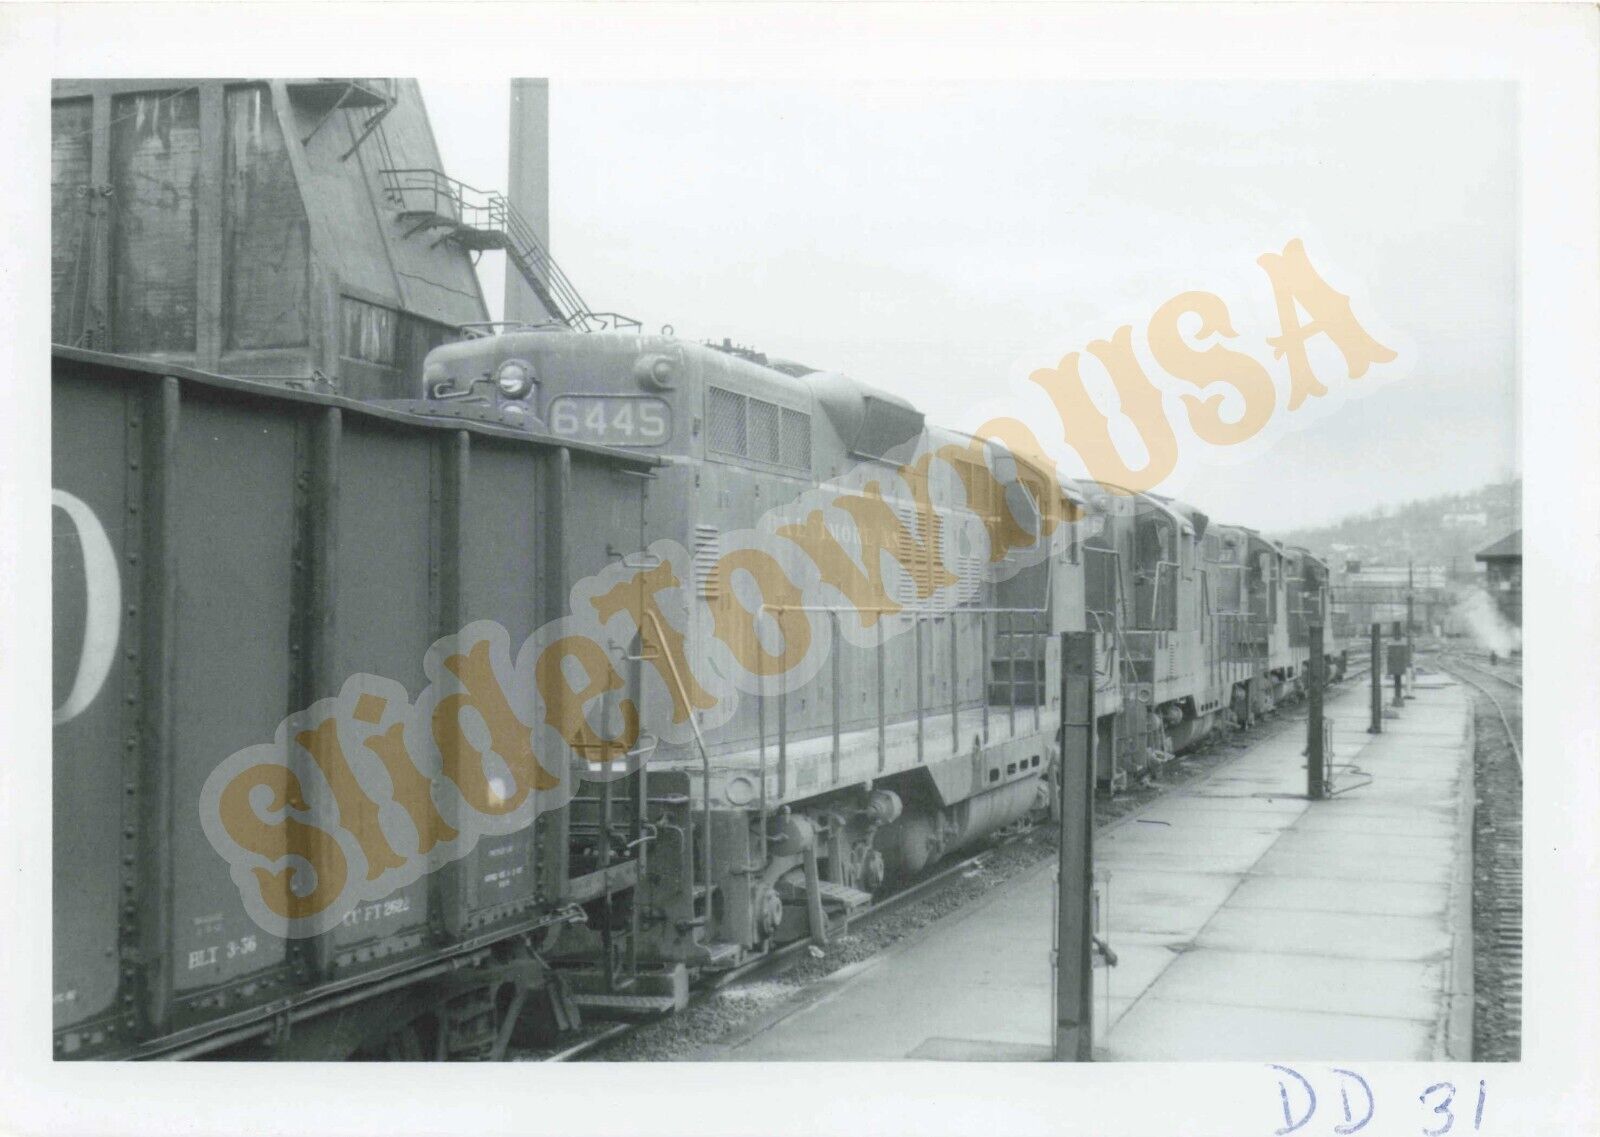 Vtg 1960\'s Railroad Train Photo 6445 B&O Baltimore & Ohio Engine P00840